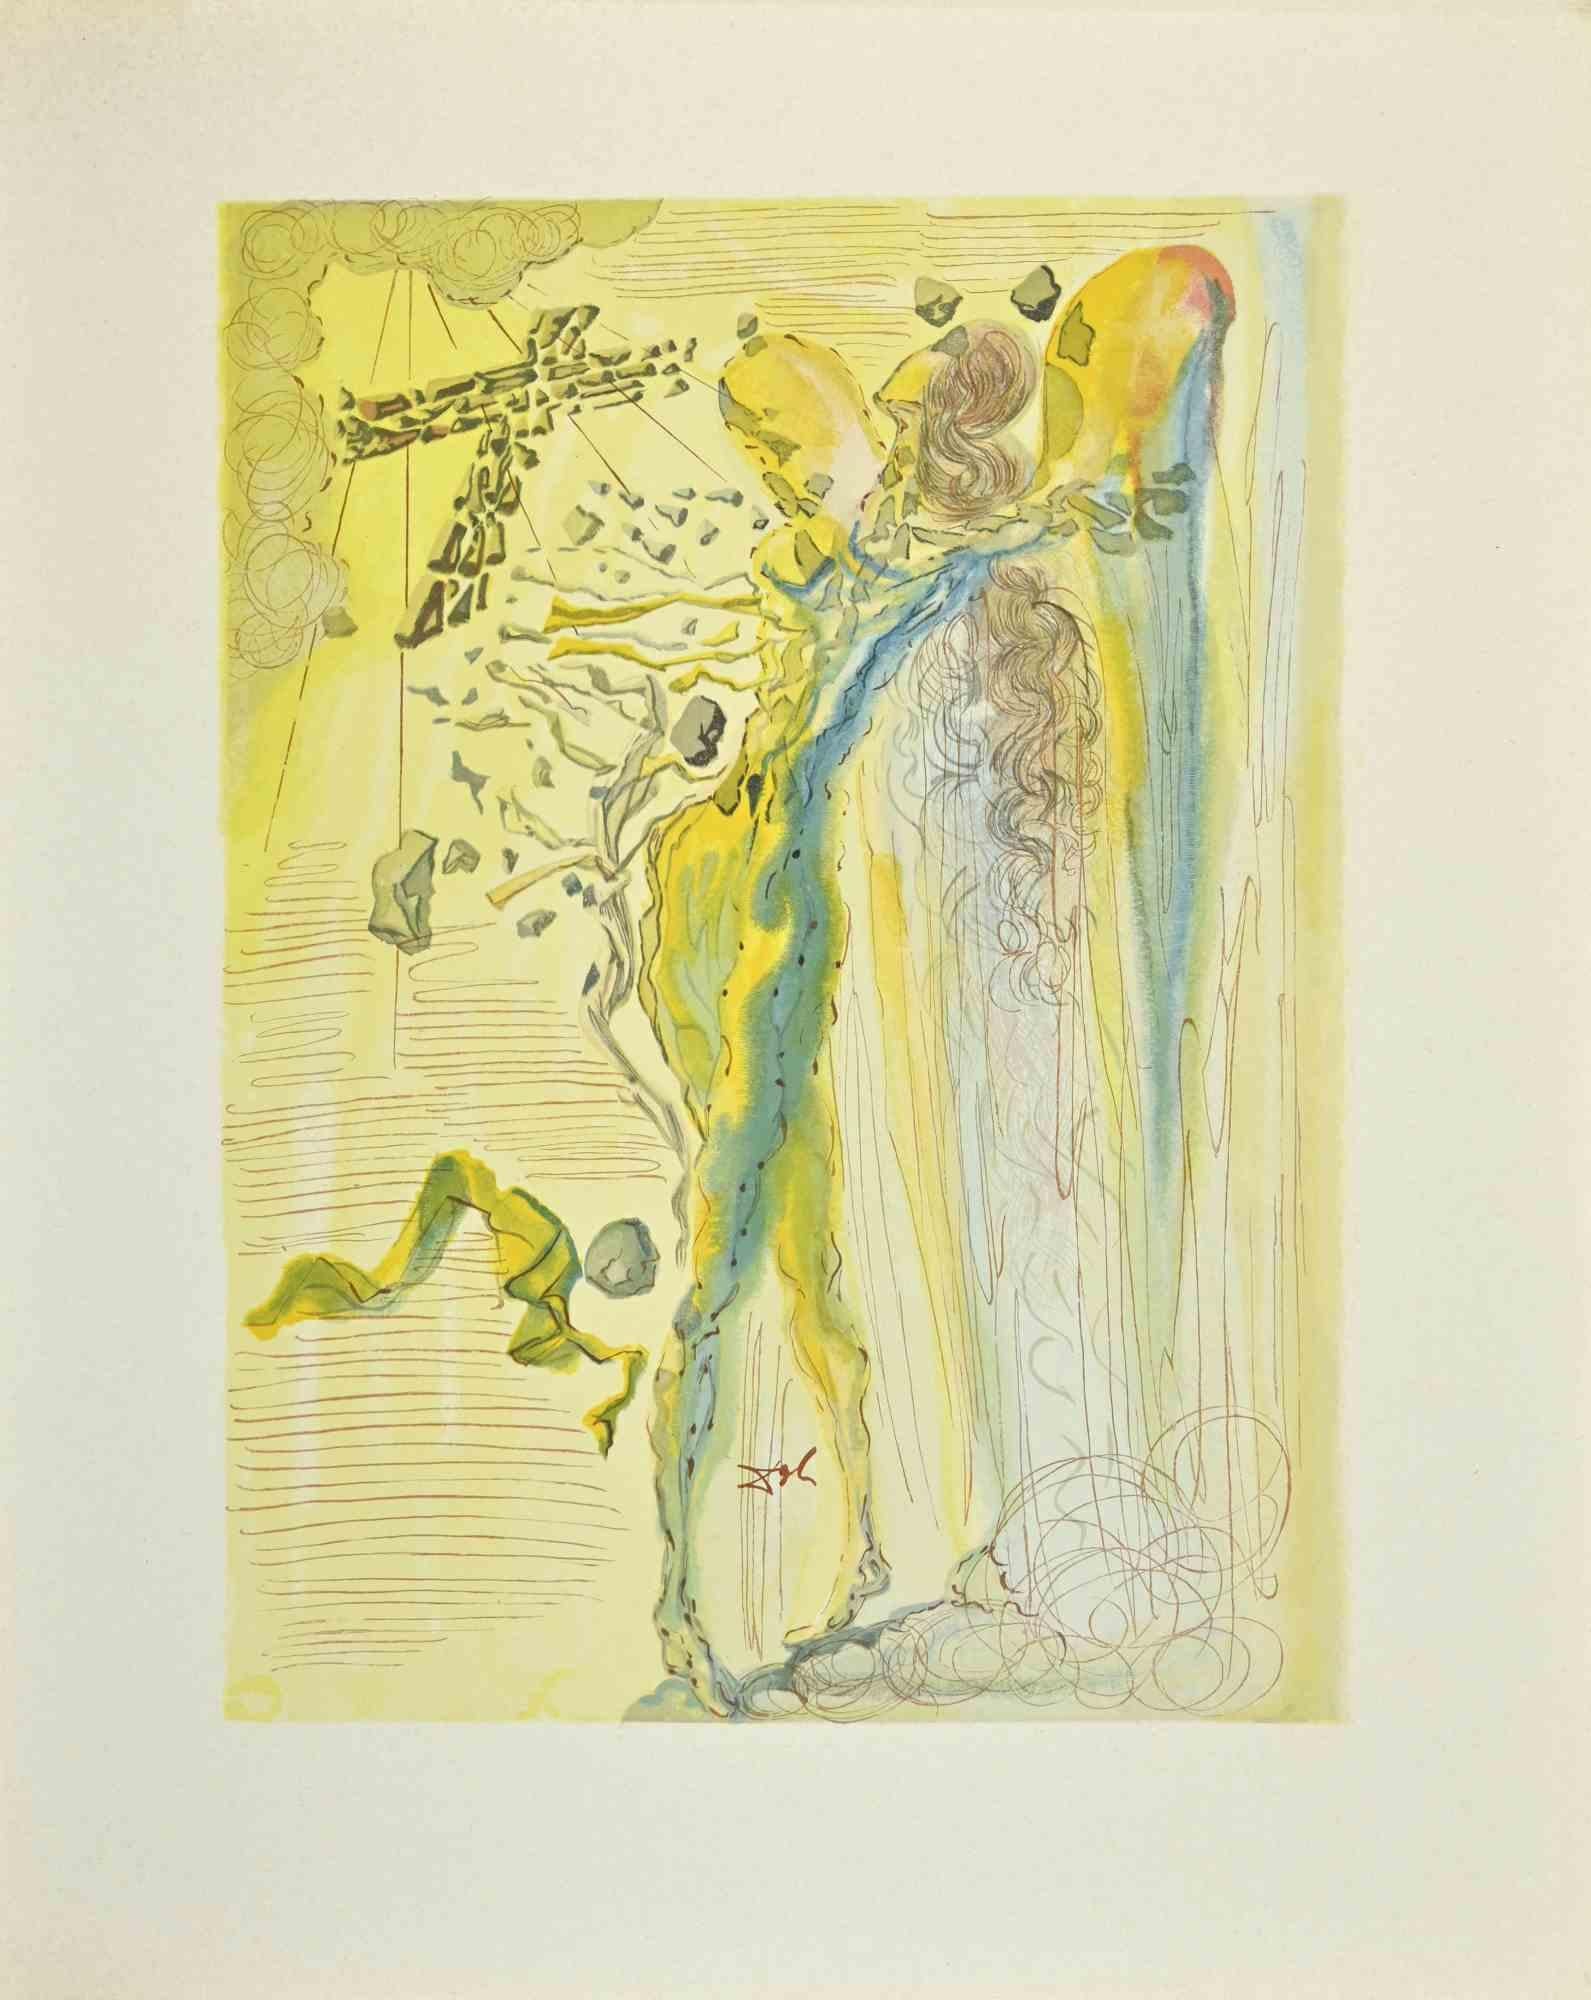 Salvador Dalí Print - The Shine of Bodies - Woodcut print - 1963